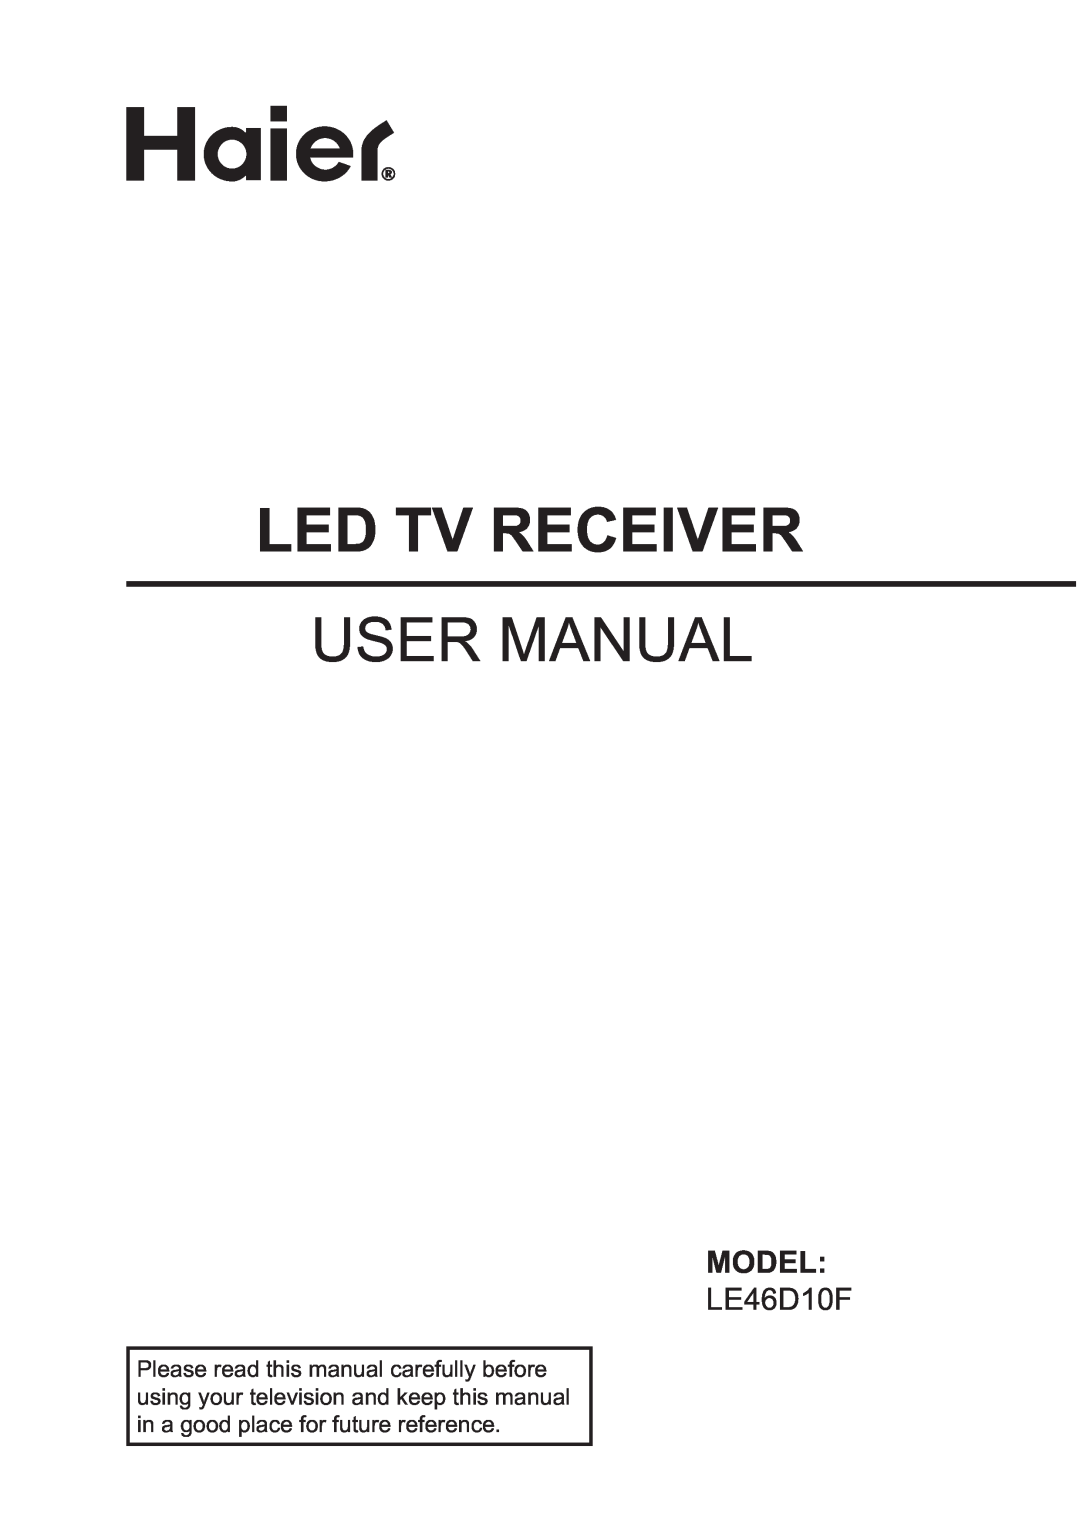 Haier LE46D10F user manual Led Tv Receiver, Model 